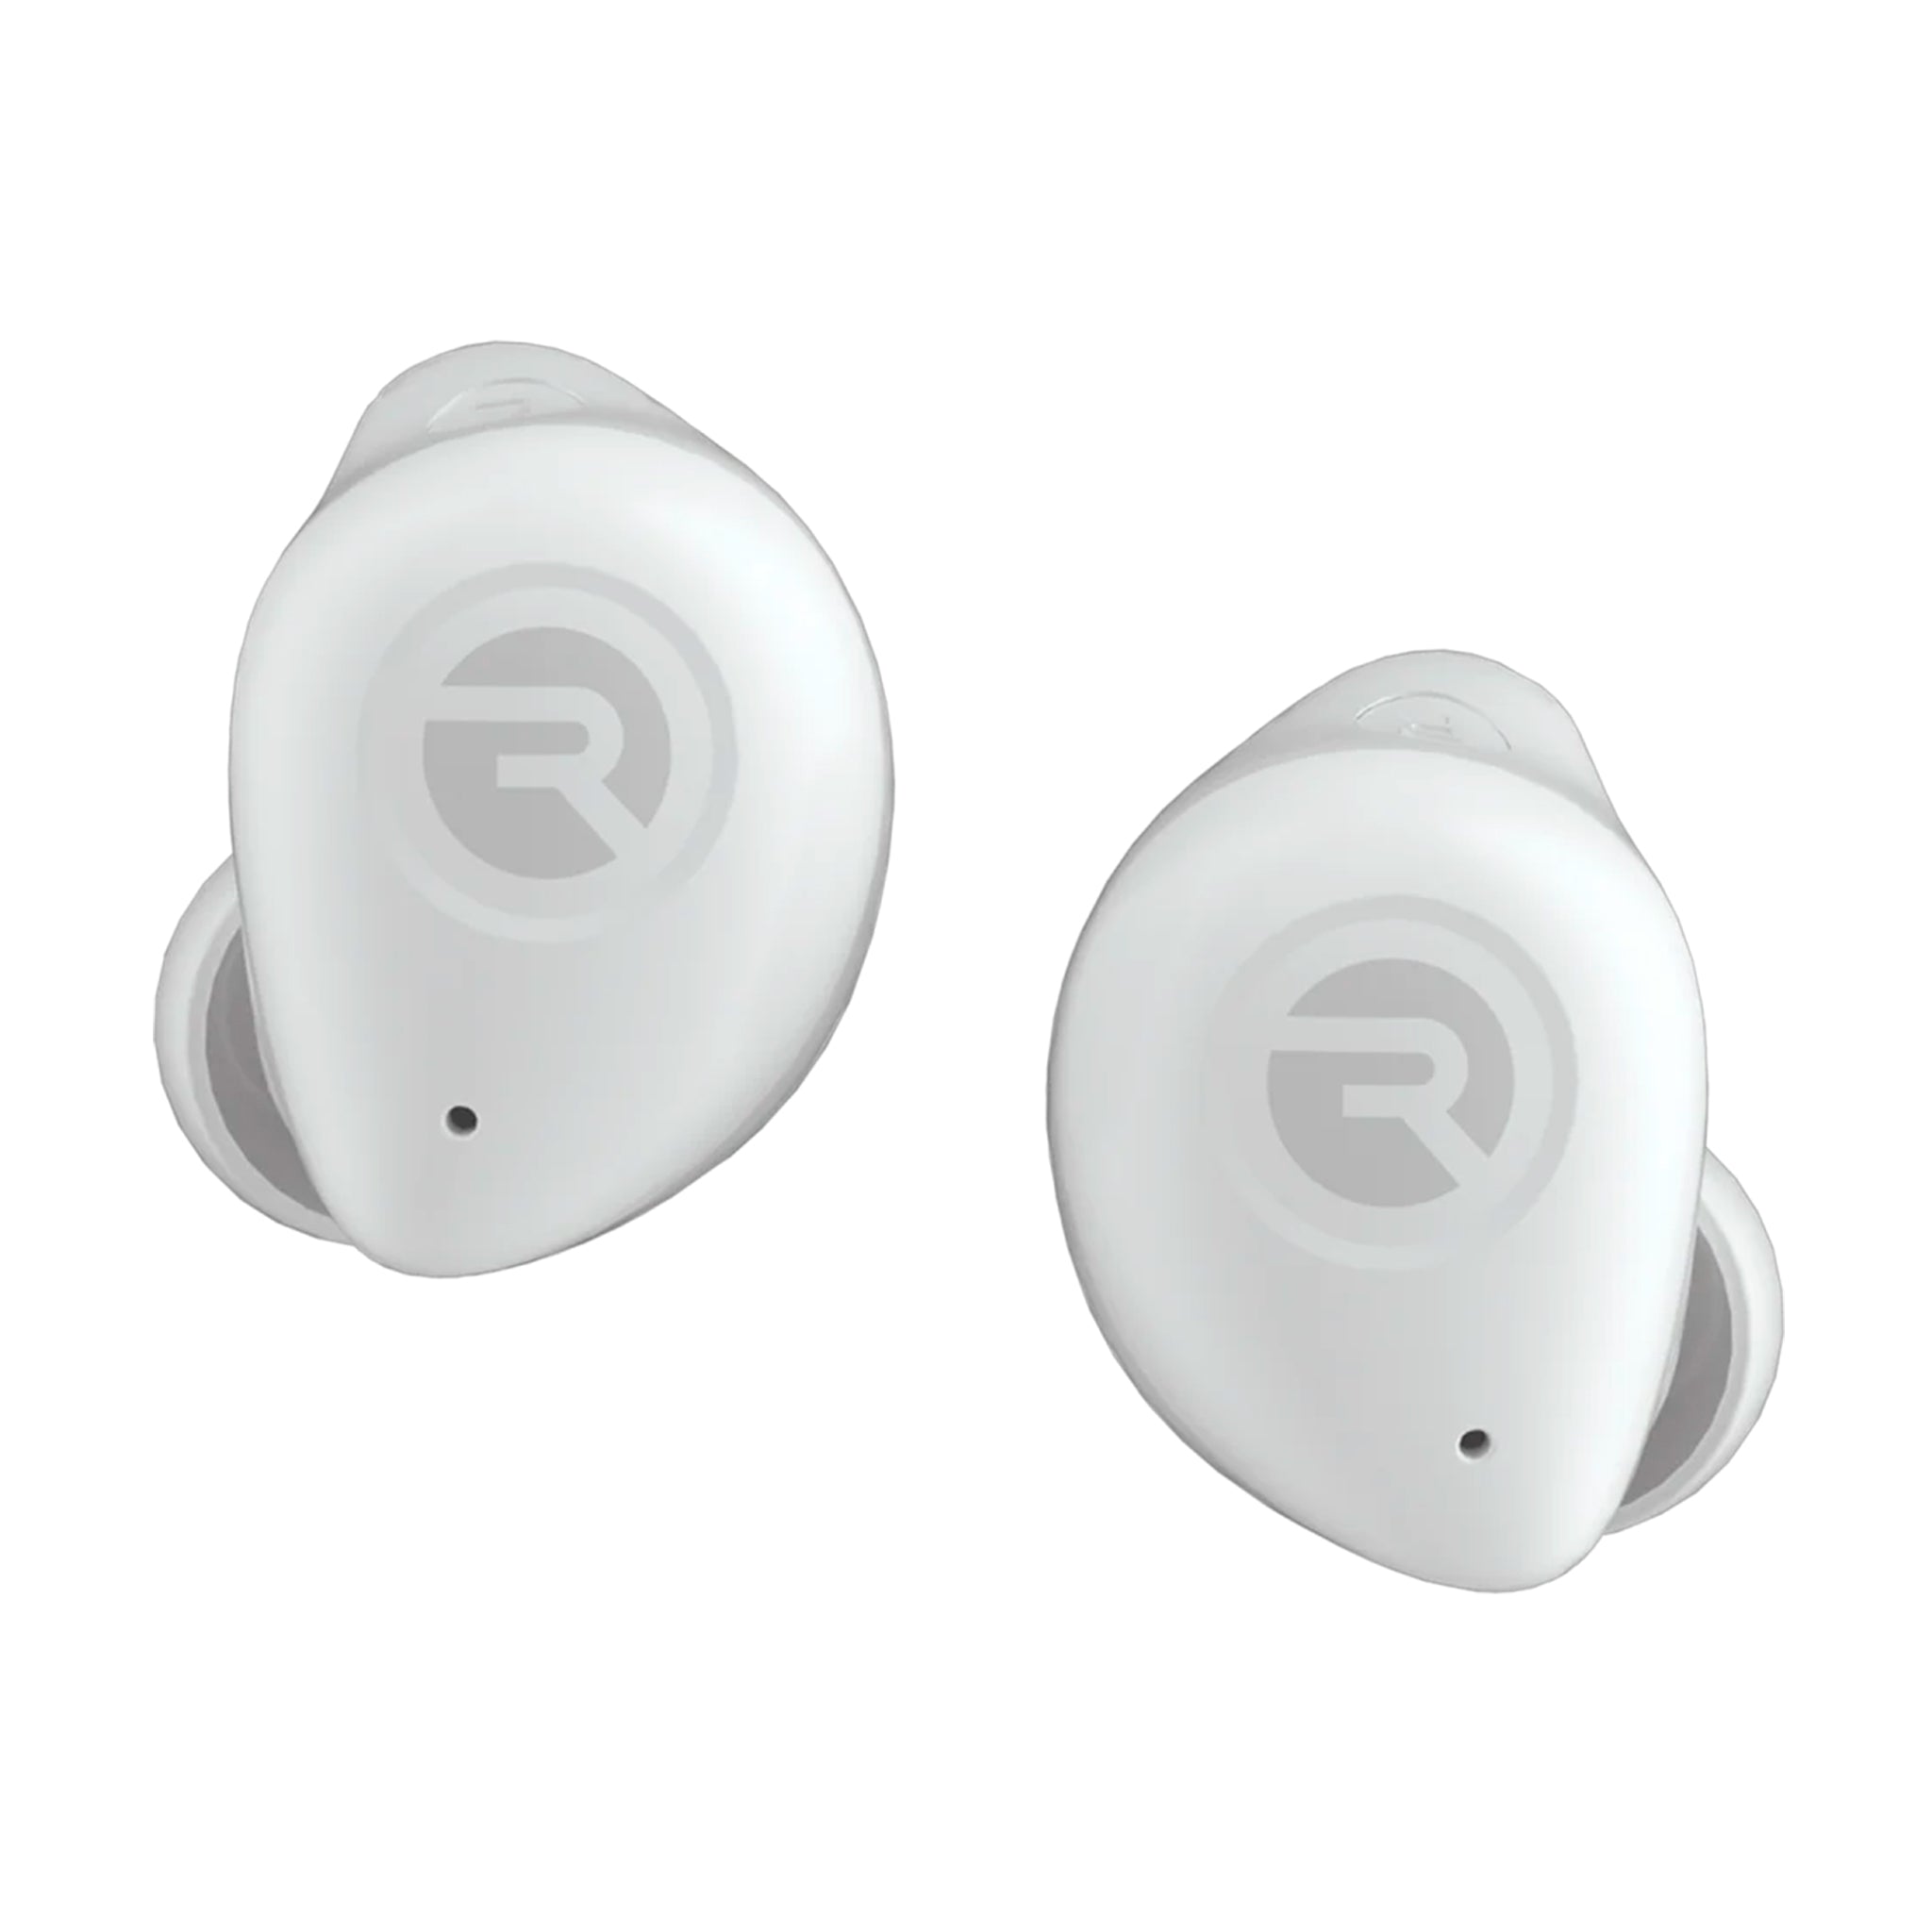 Raycon - The Fitness In Ear True Wireless Earbuds - White